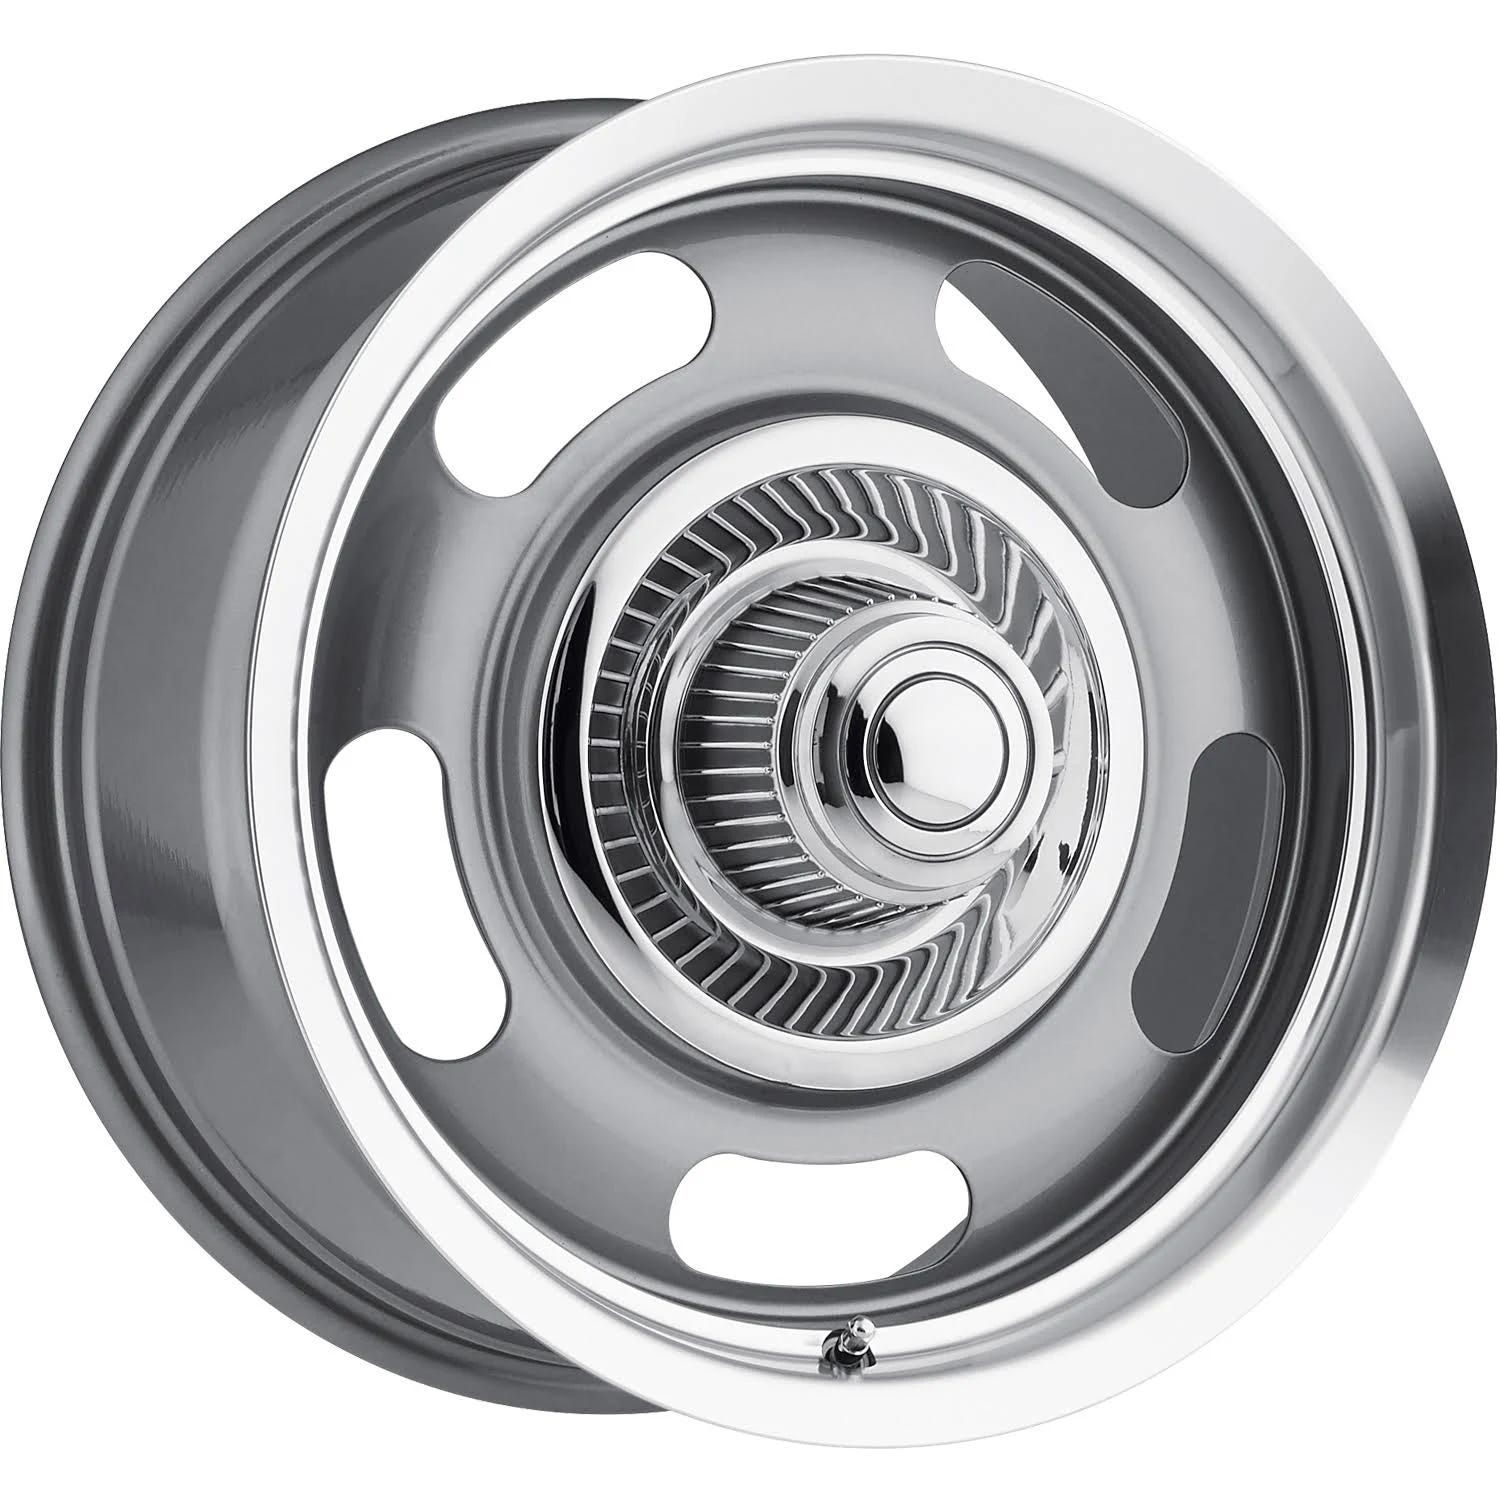 Gunmetal Vision Wheels for Offset Customization | Image